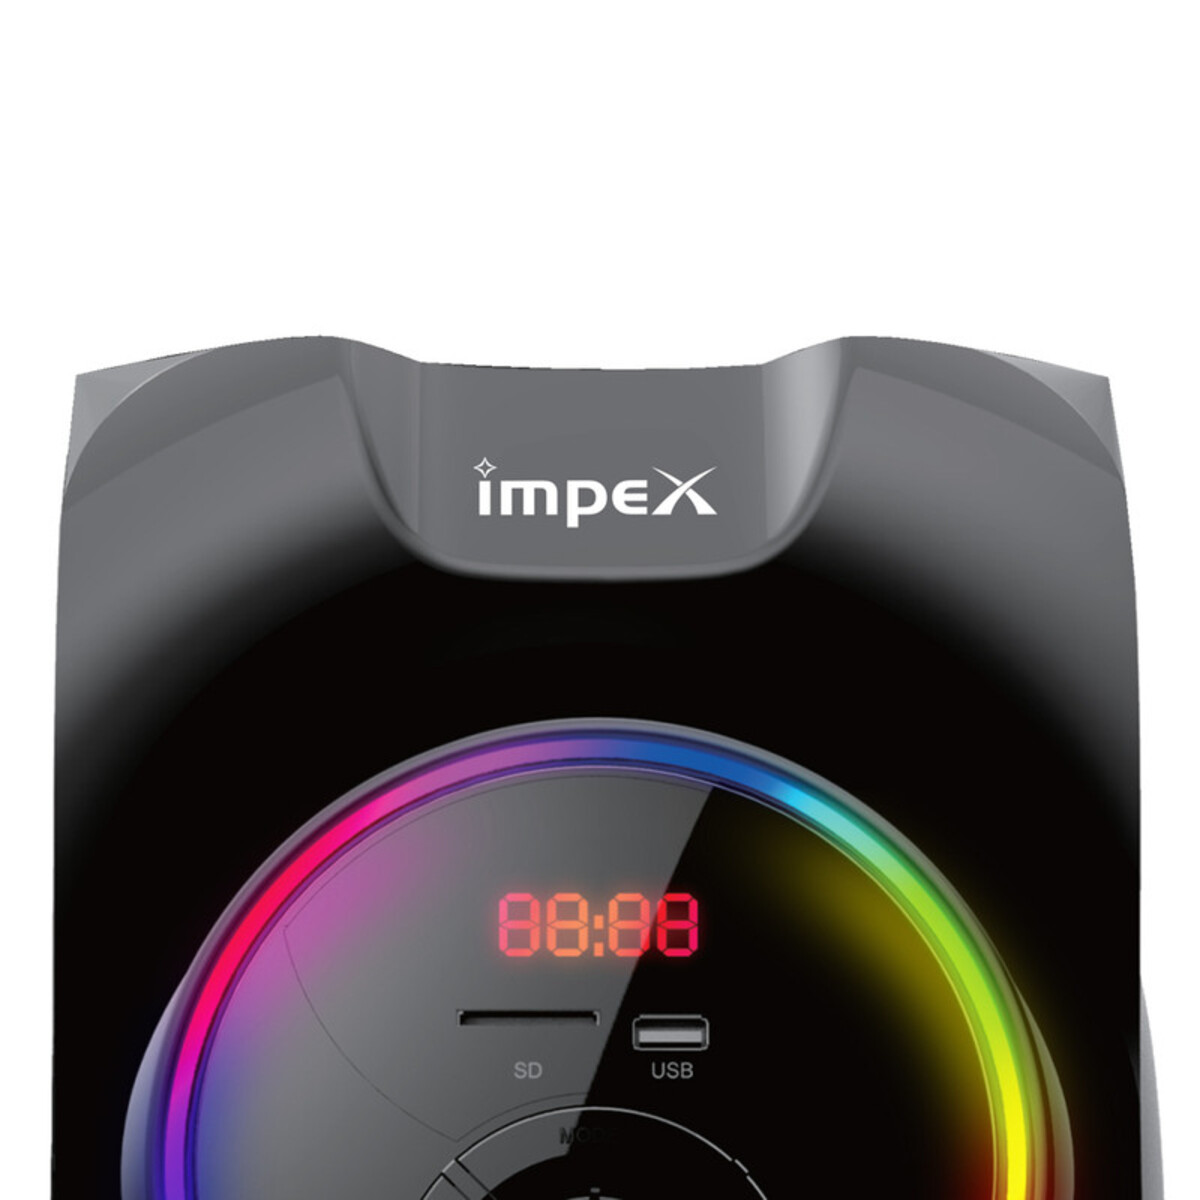 Impex BEAT B3 100 Watts 5.1 Channel Multimedia Speaker System